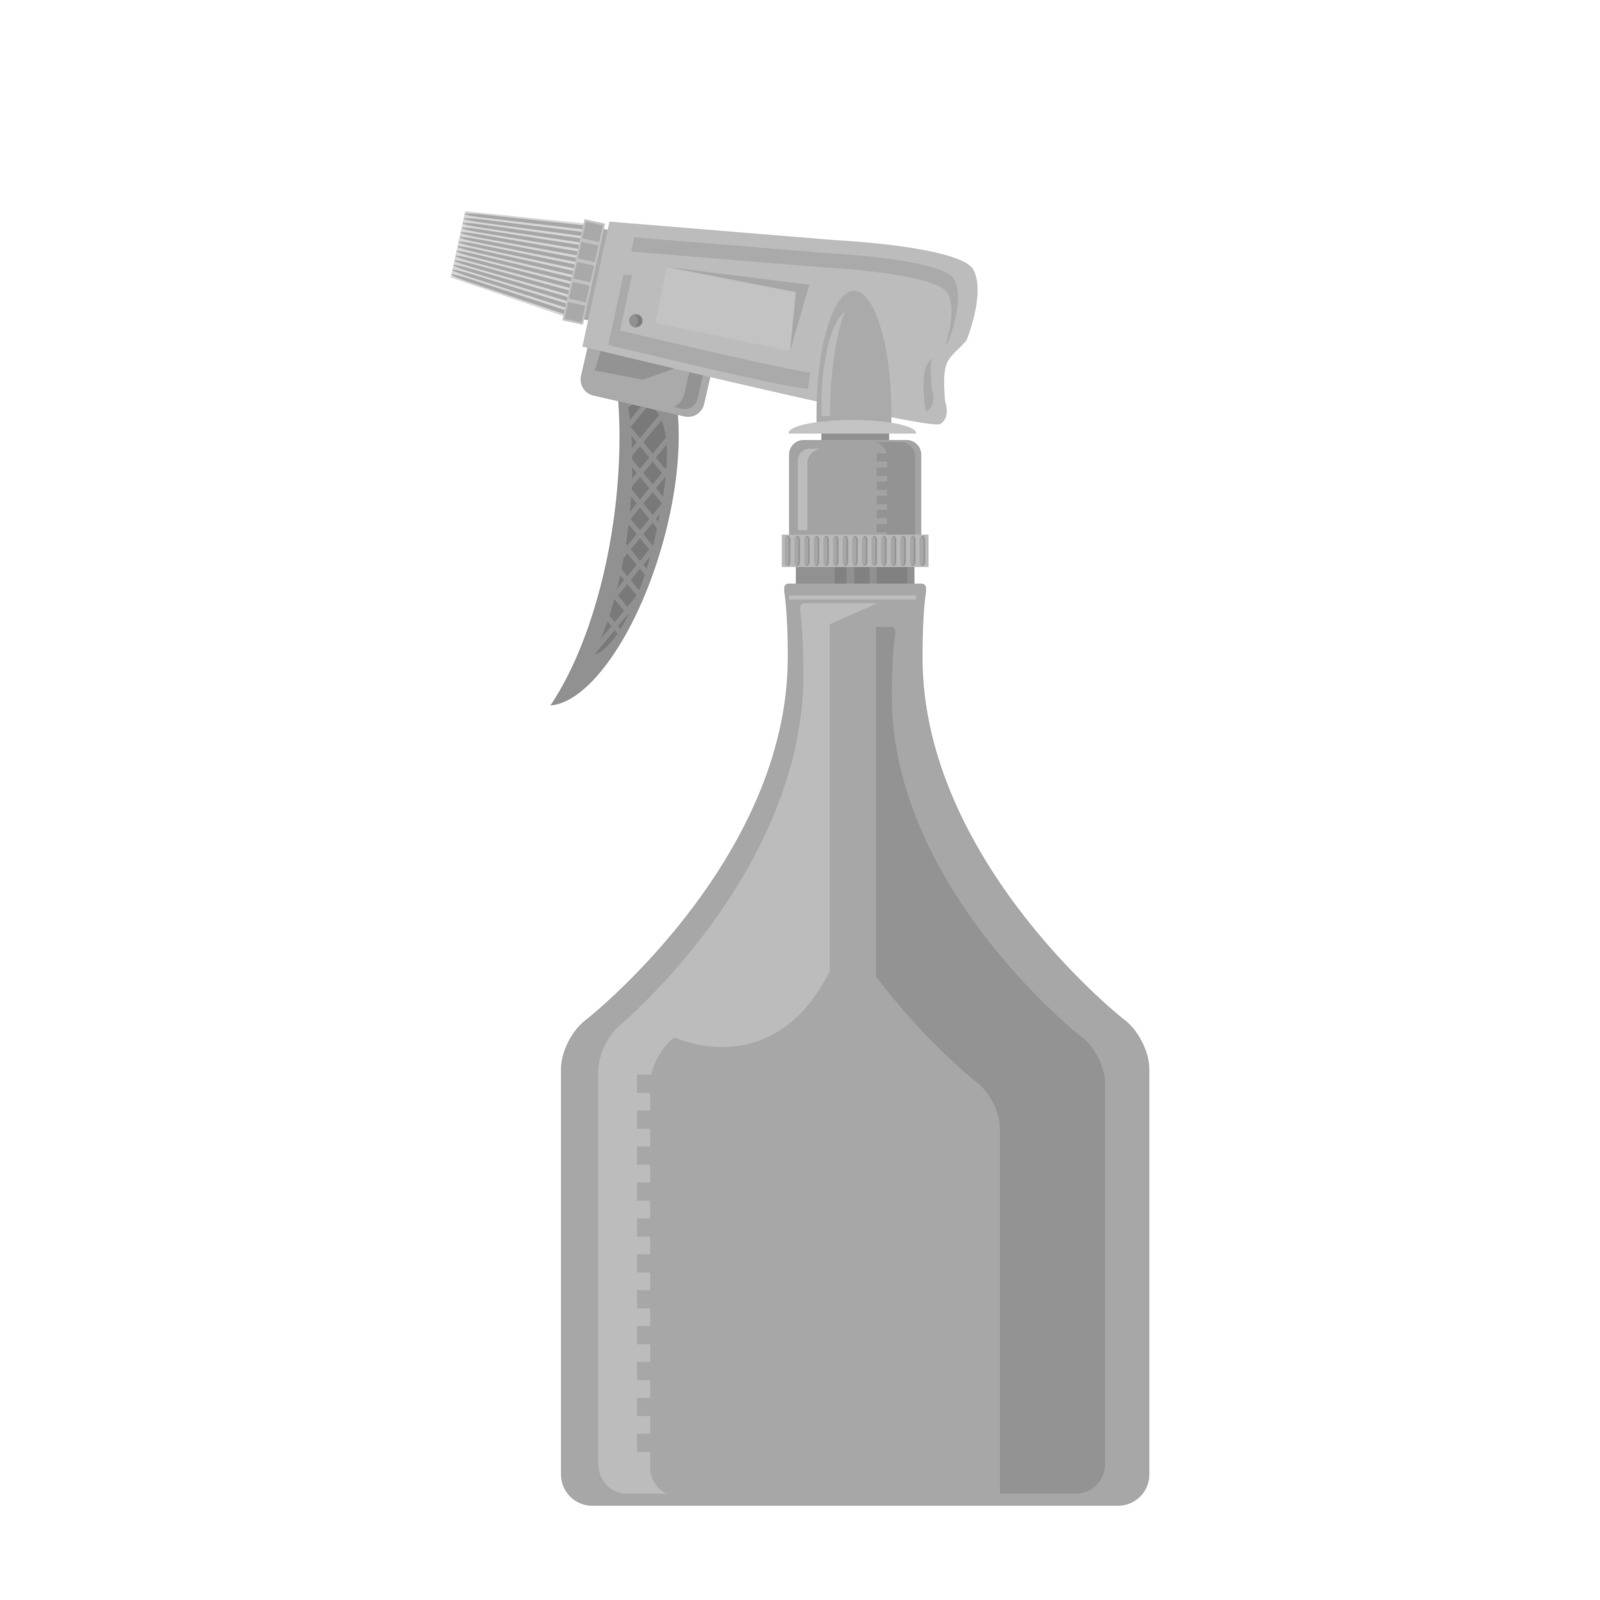 Hand Sanitizer Icon Isolated on White Background. Bottle Spray Symbol by valeo5